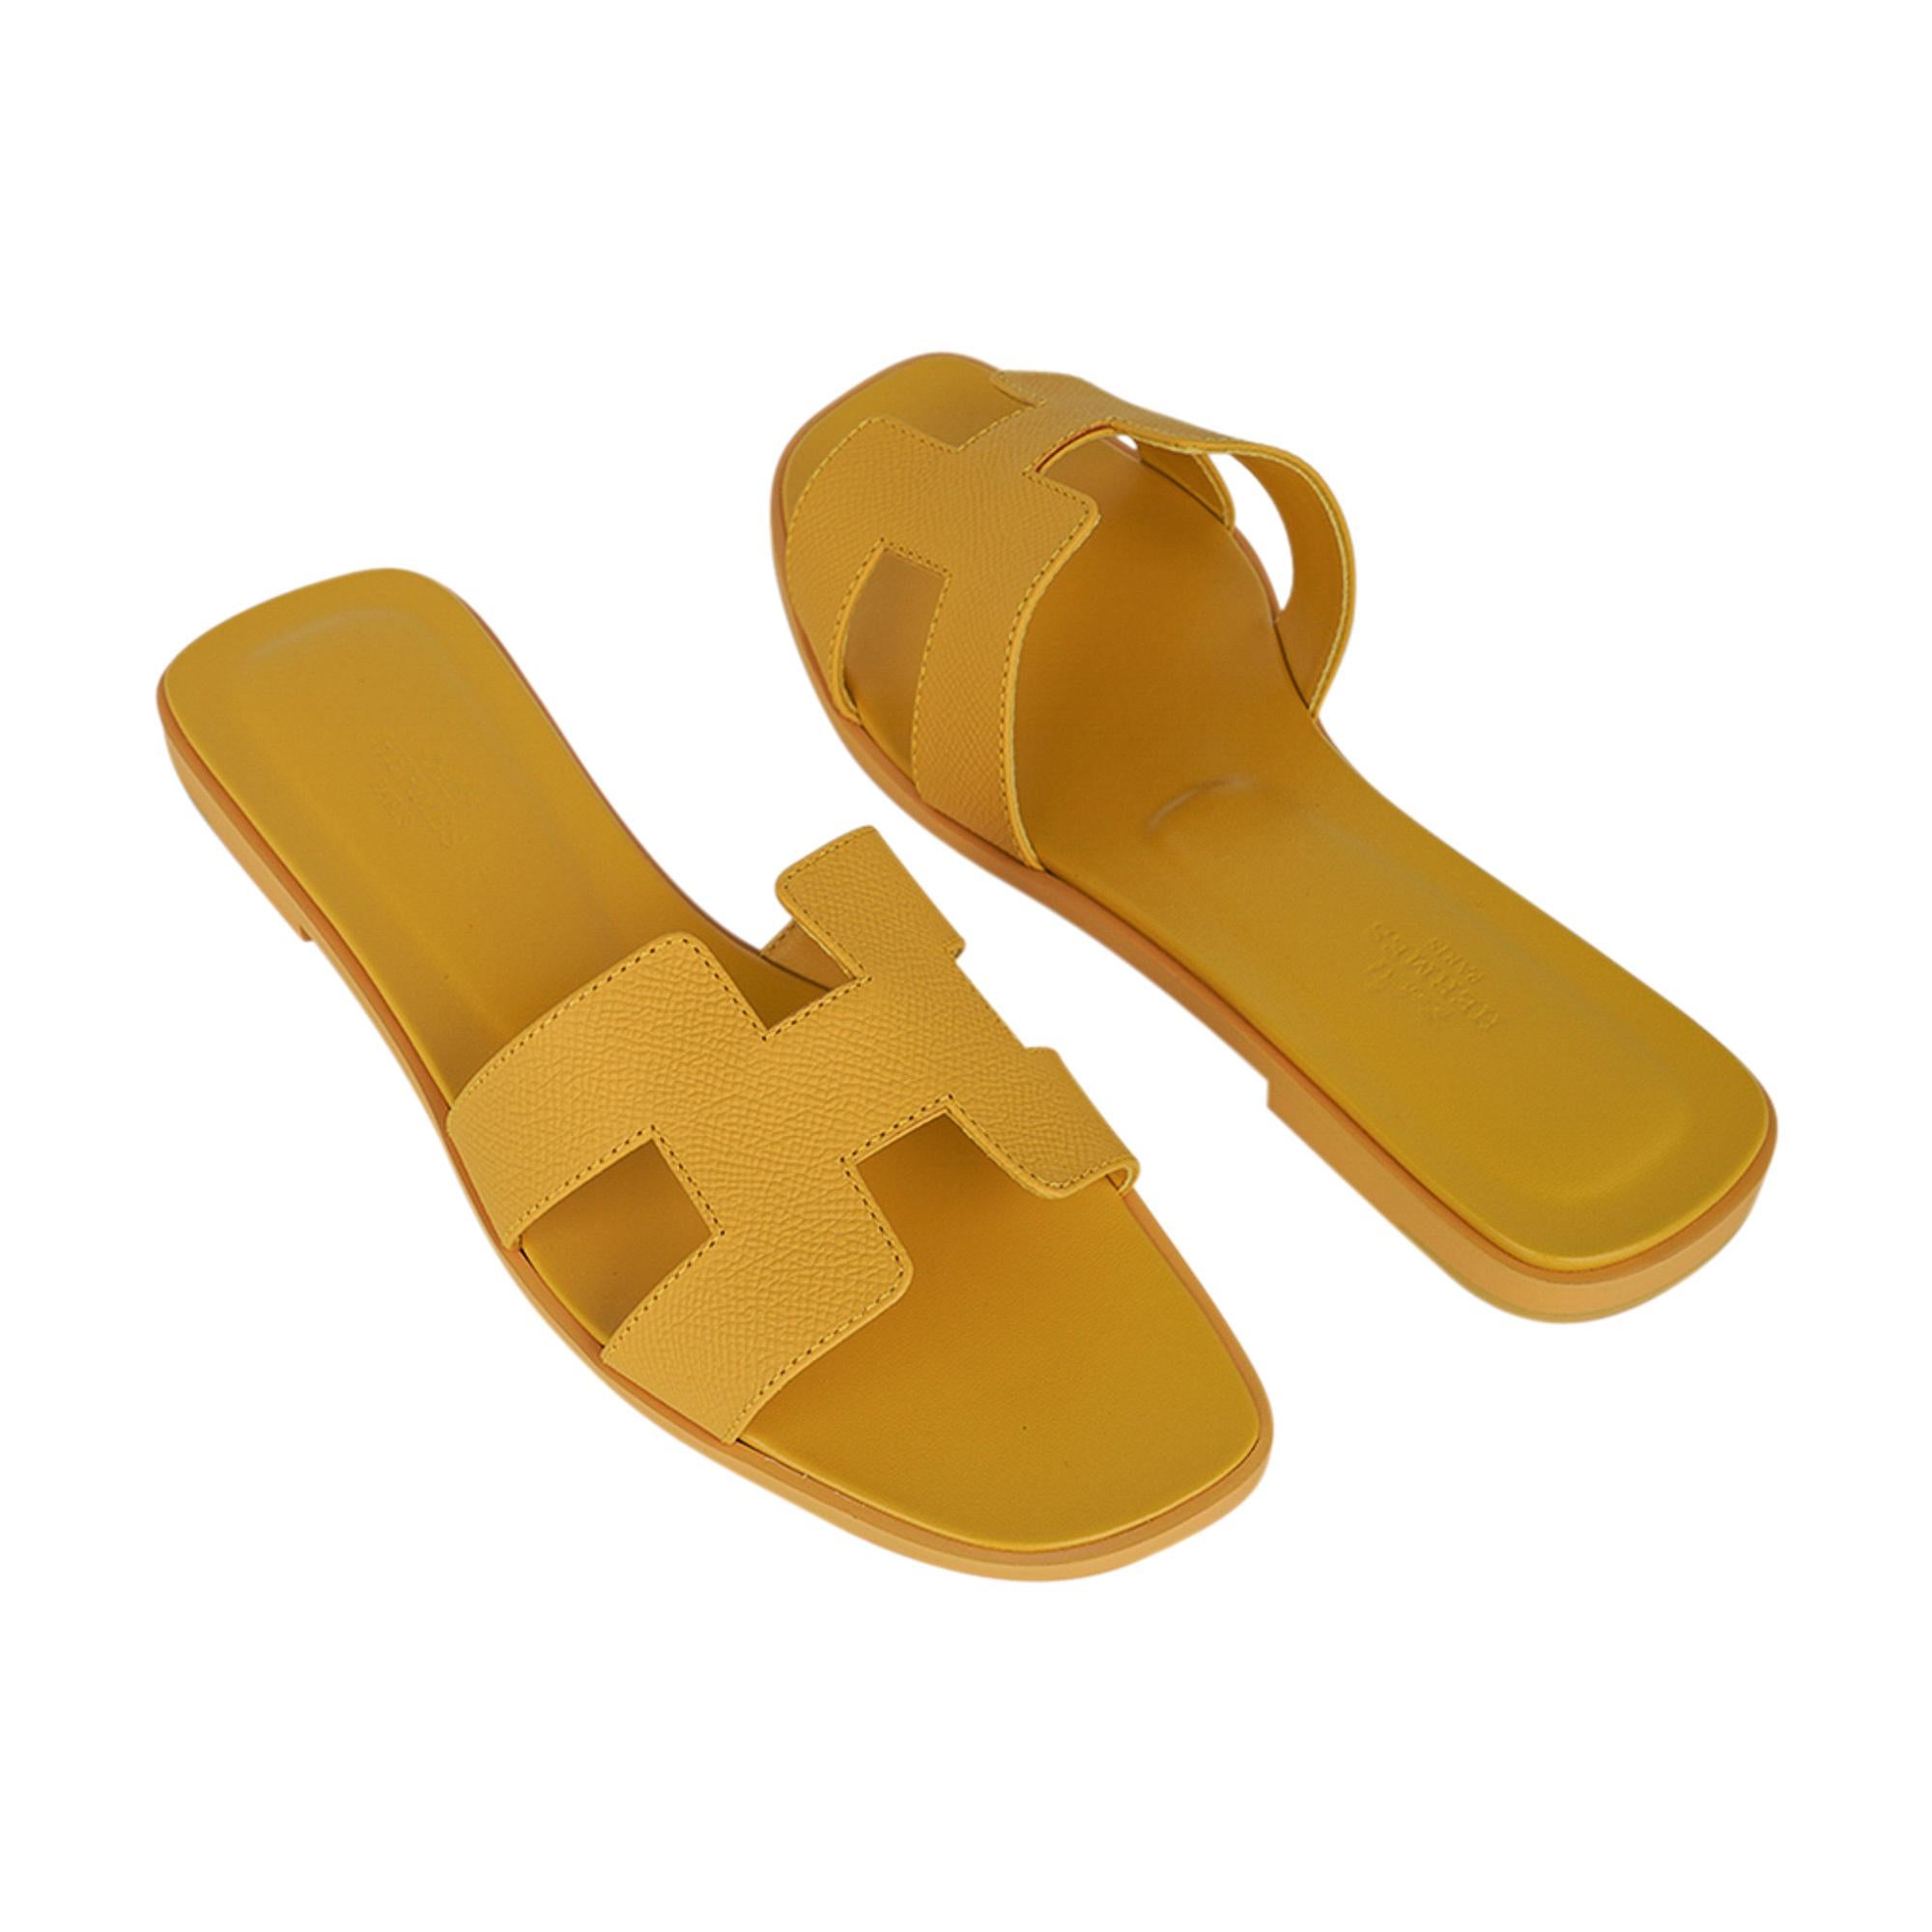 yellow hermes sandals